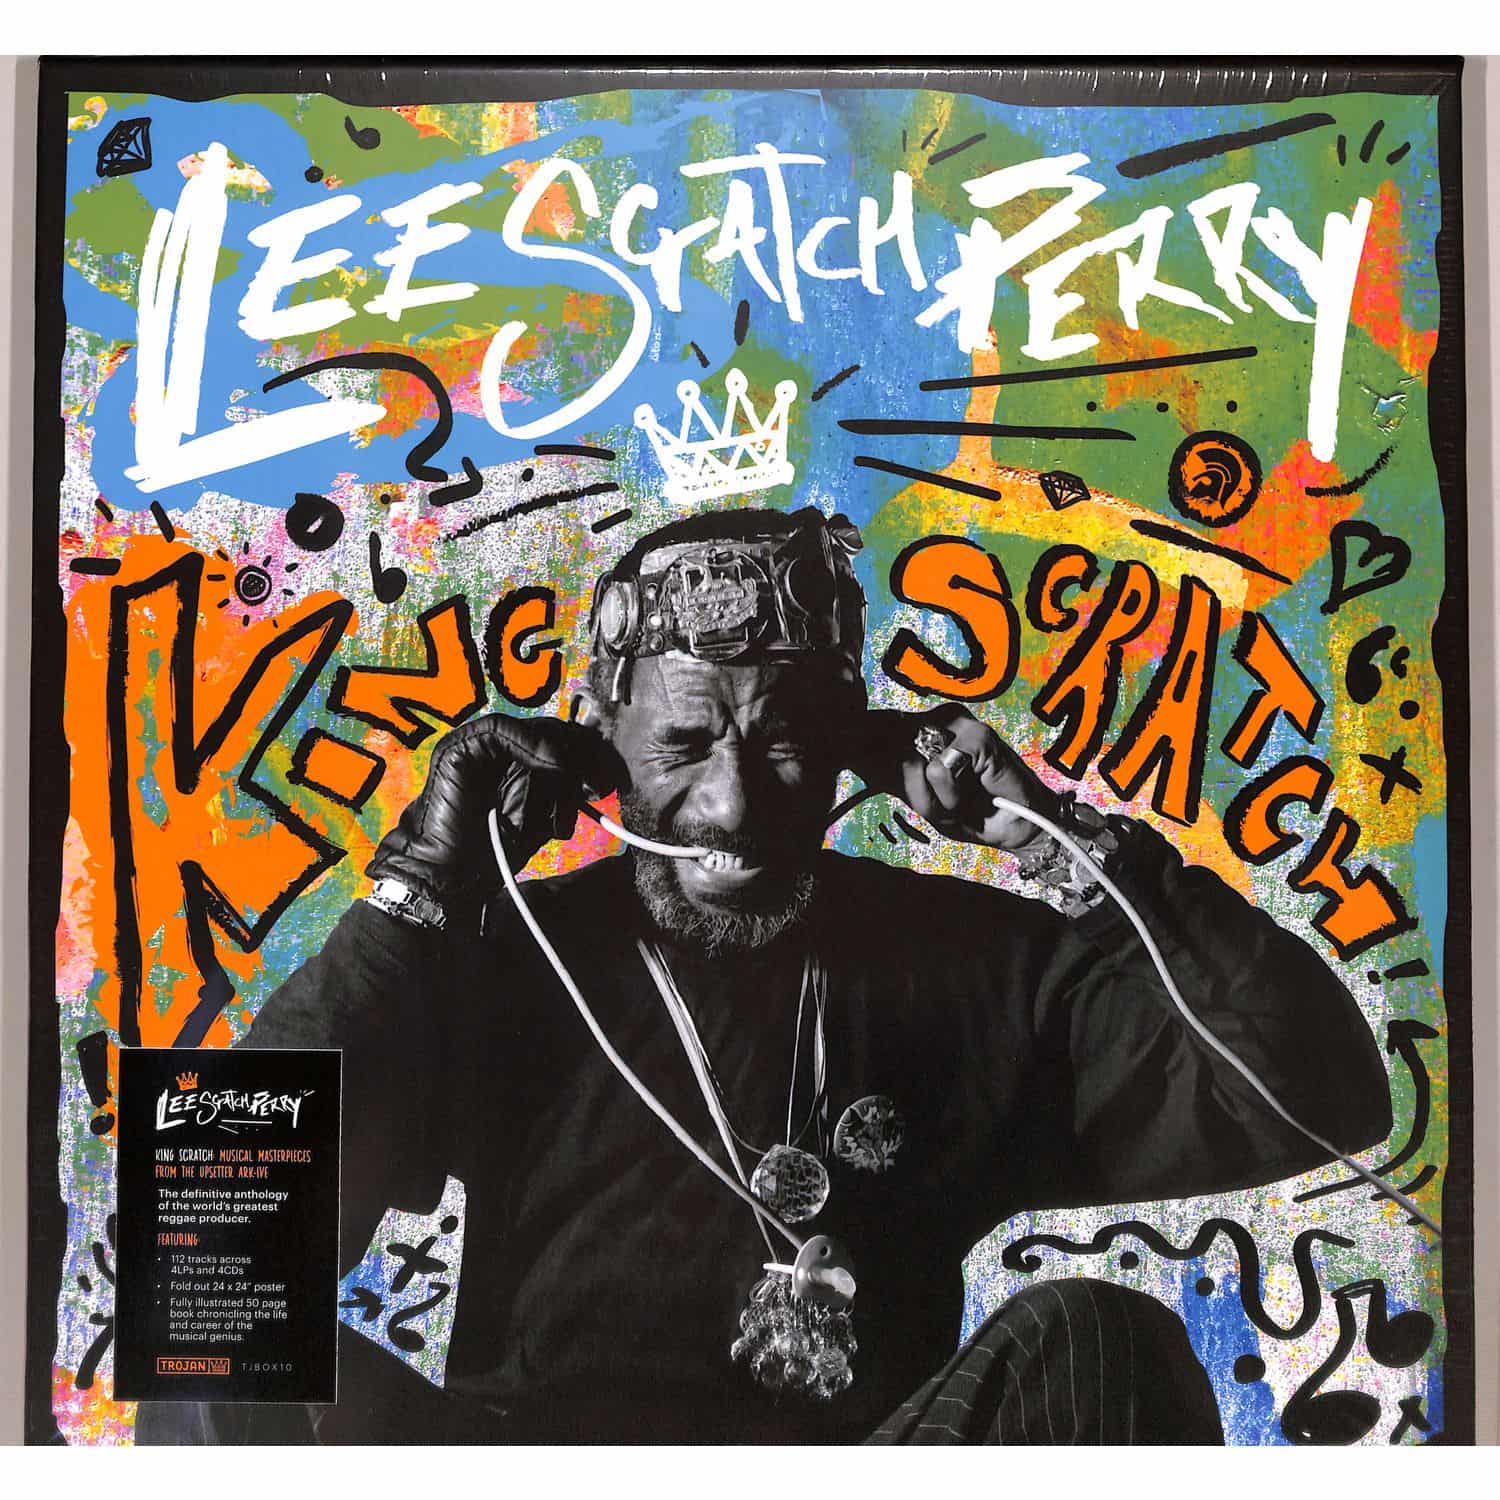 Lee Scratch Perry - KING SCRATCH 